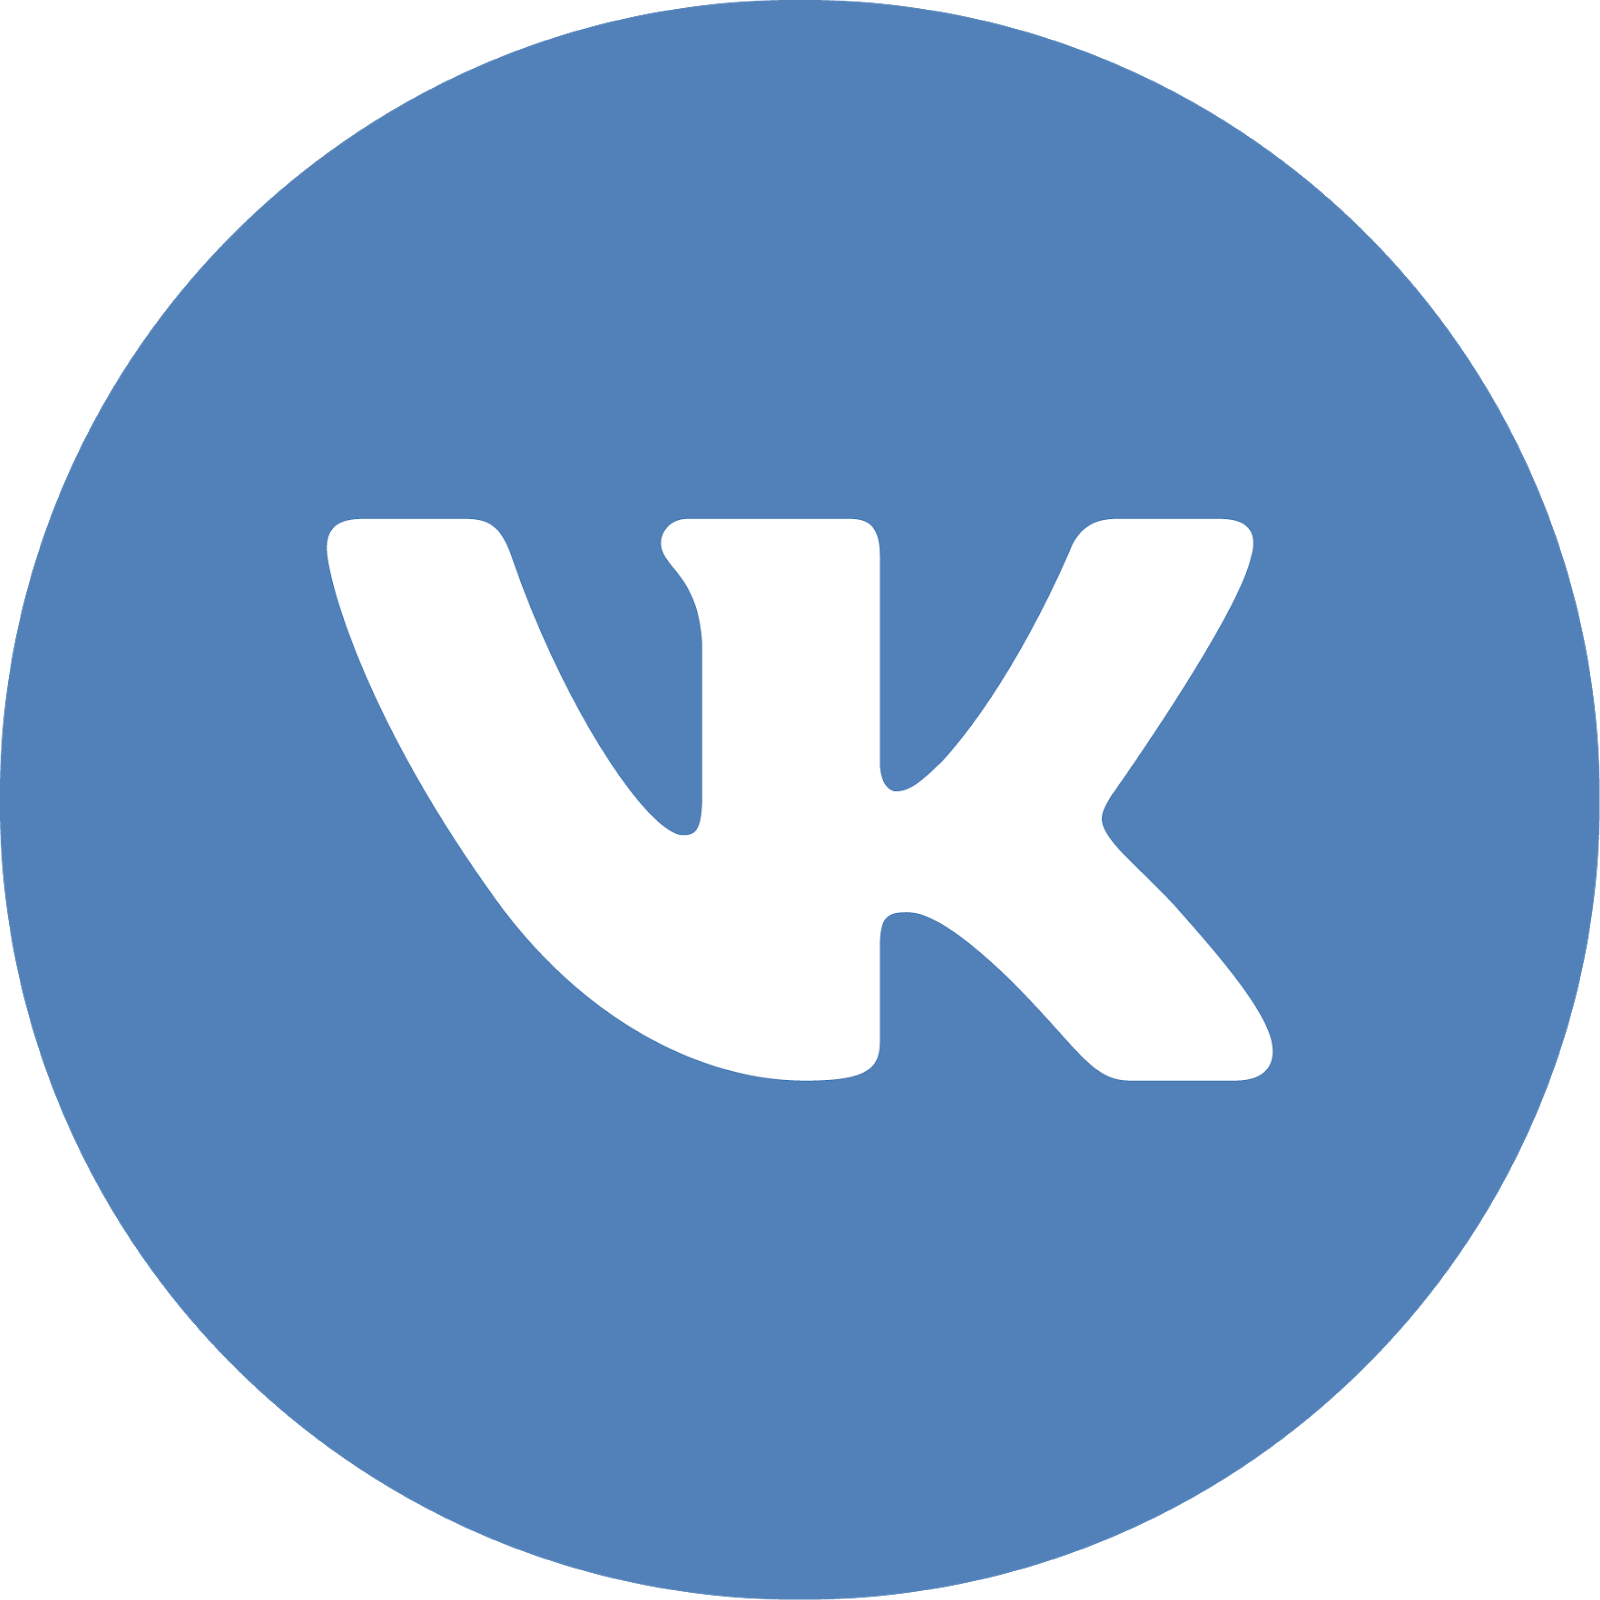 Vkontakte Logo PNG HD